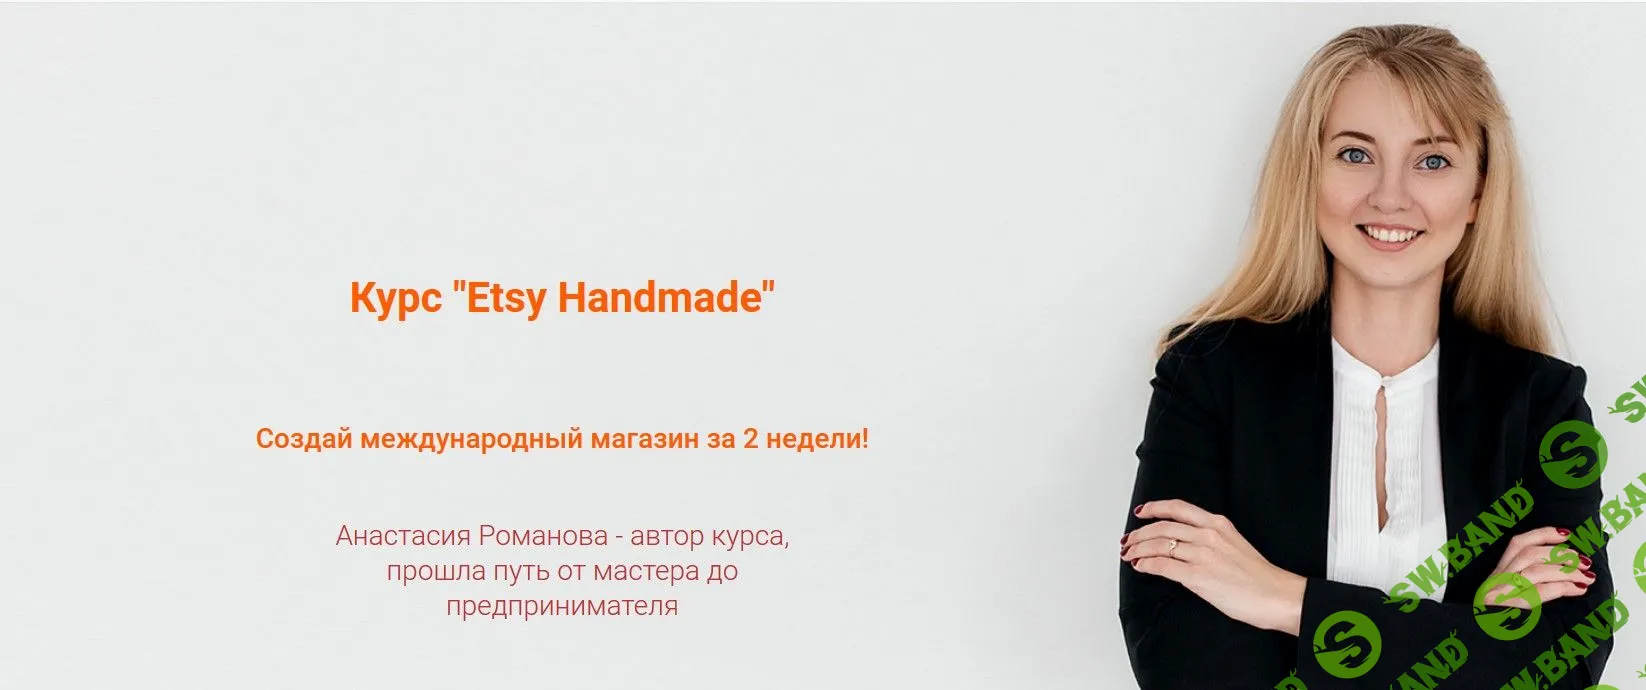 [Анастасия Романова] Etsy Handmade. Открытие магазина (2020)